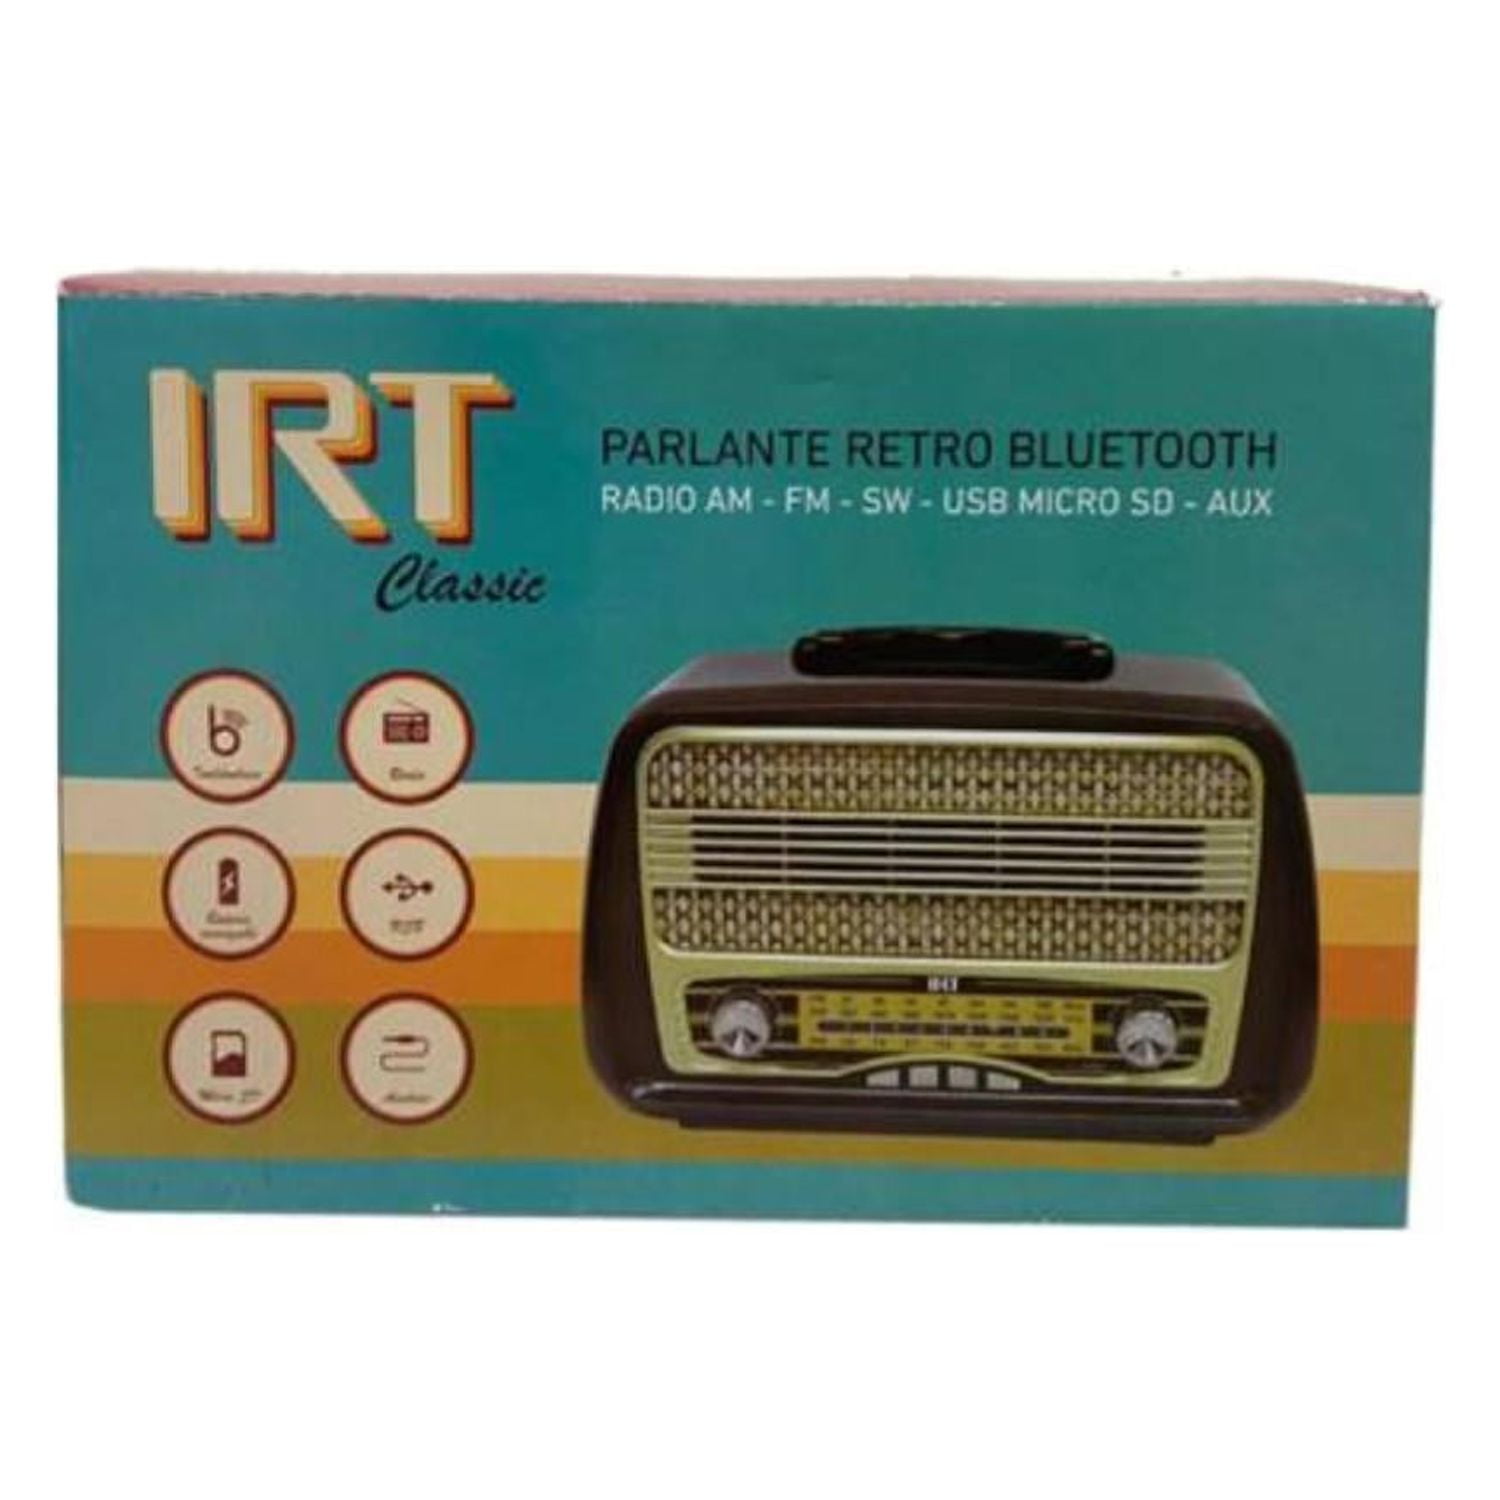 IRT Radio Retro Irt Inálambrico 07 IRT